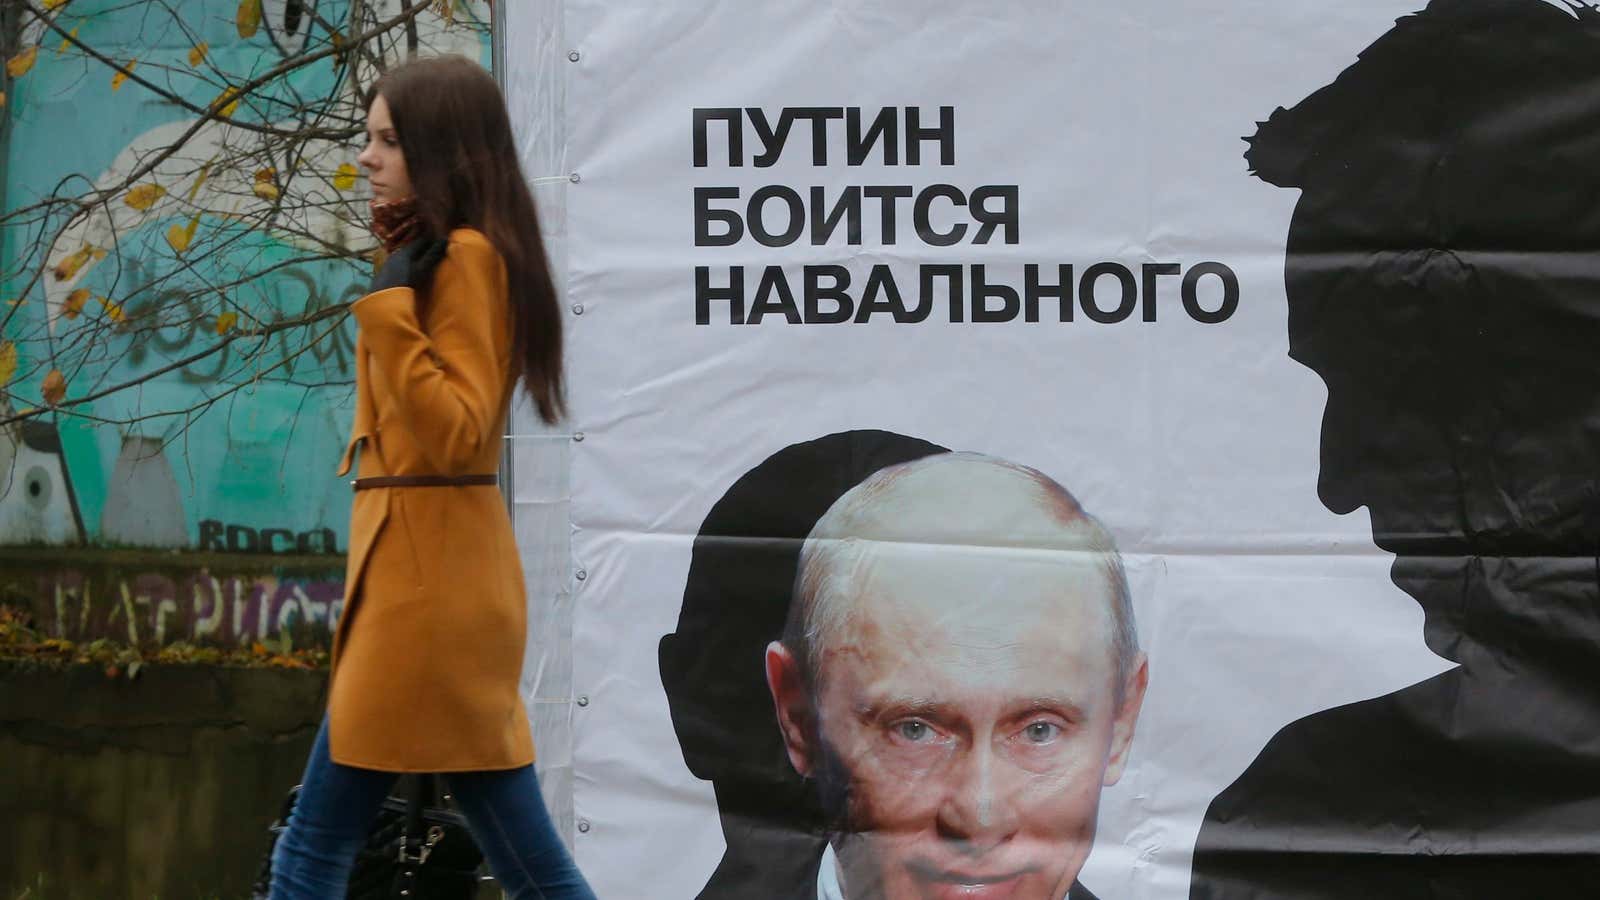 “Putin is afraid of Navalny.” So it would seem.